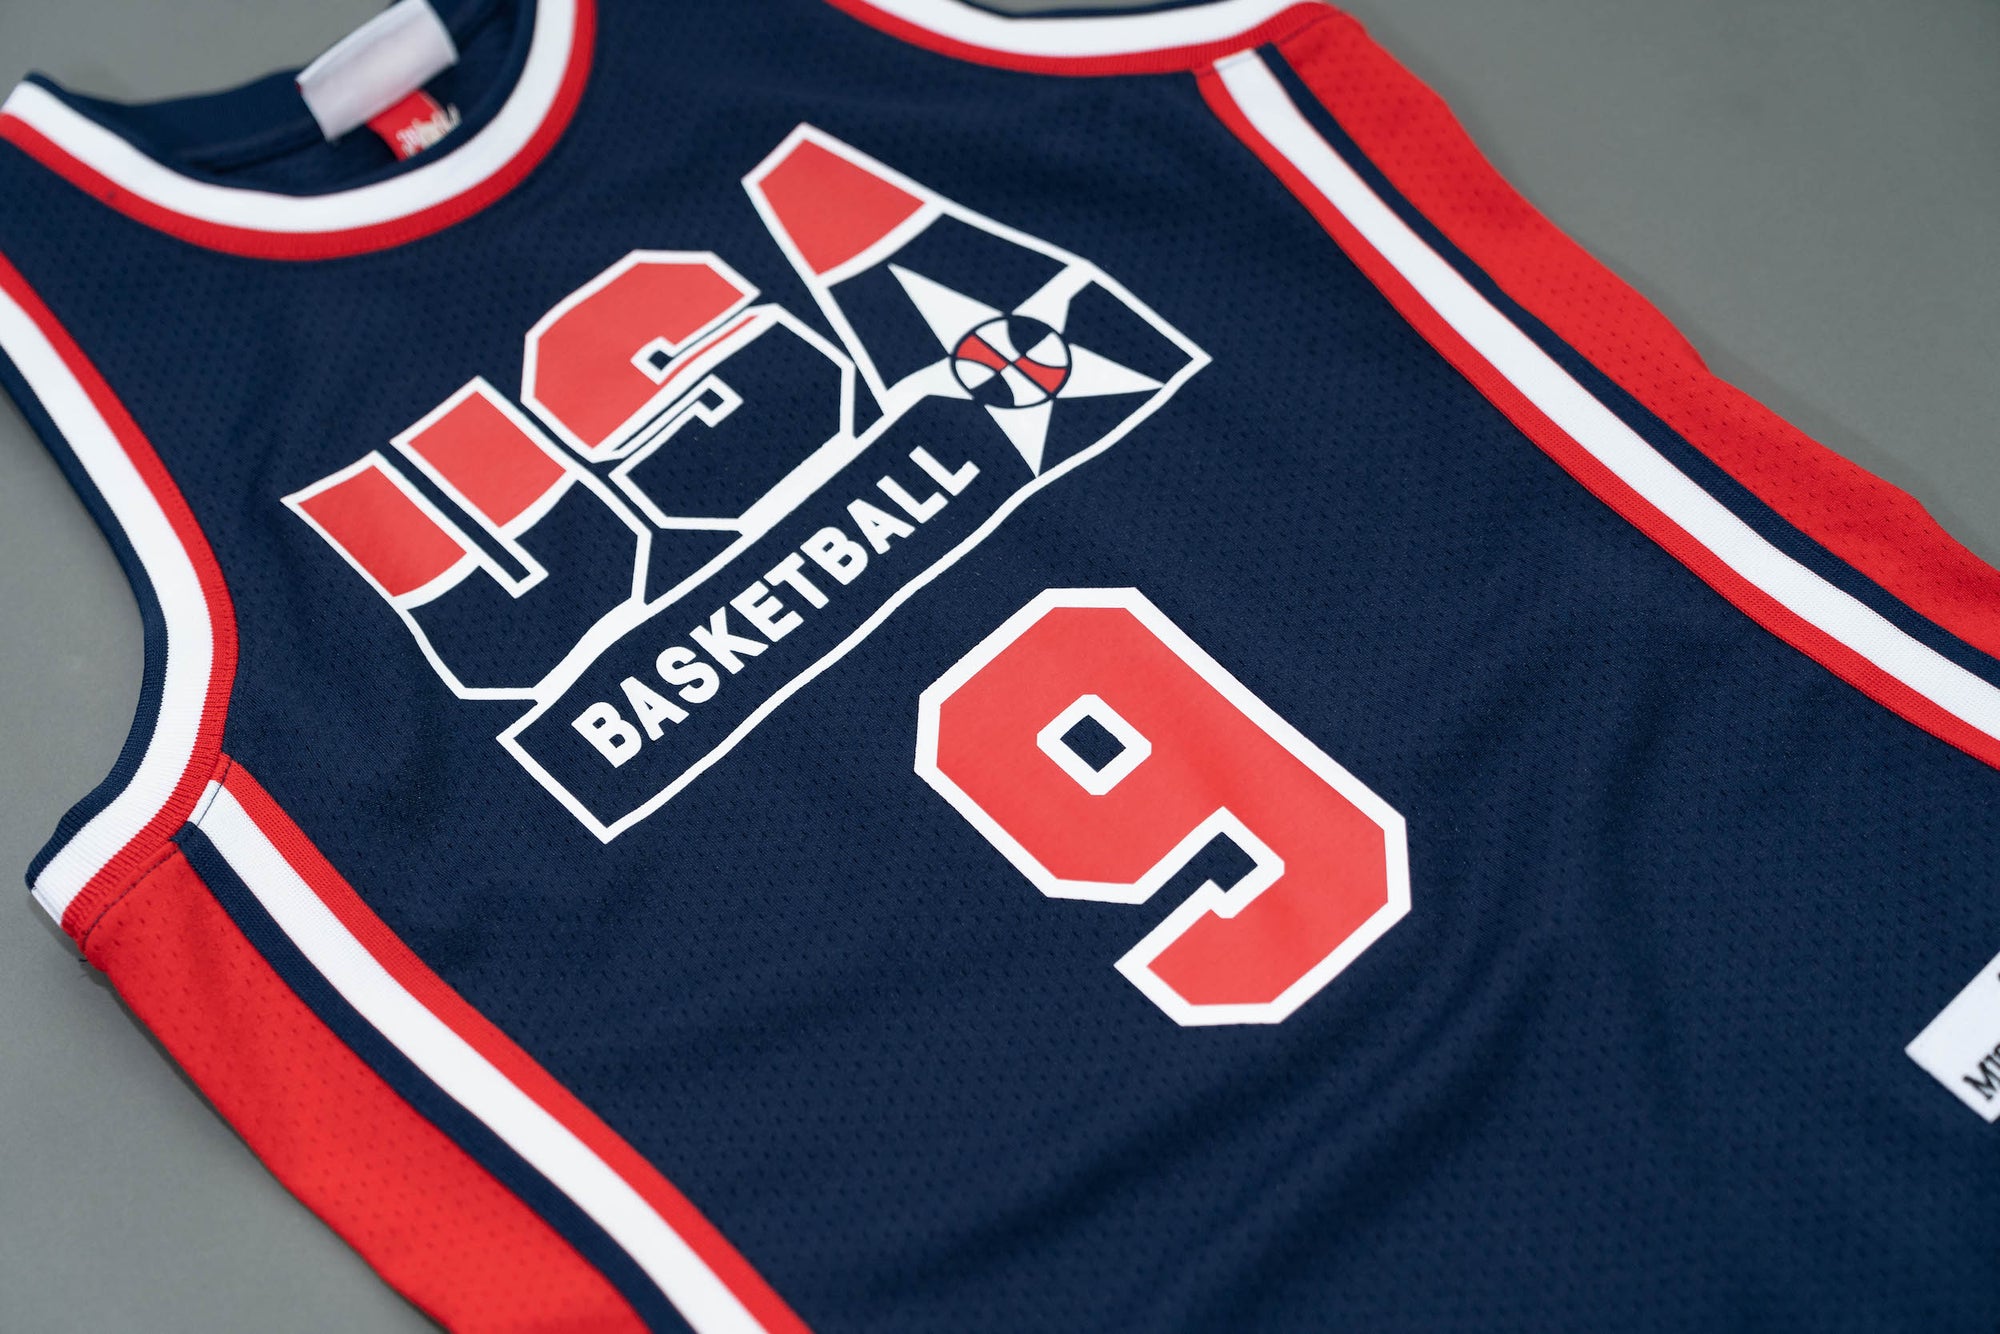 Mitchell & Ness 1984 USA Basketball Authentic Alternate Jersey - Michael Jordan S